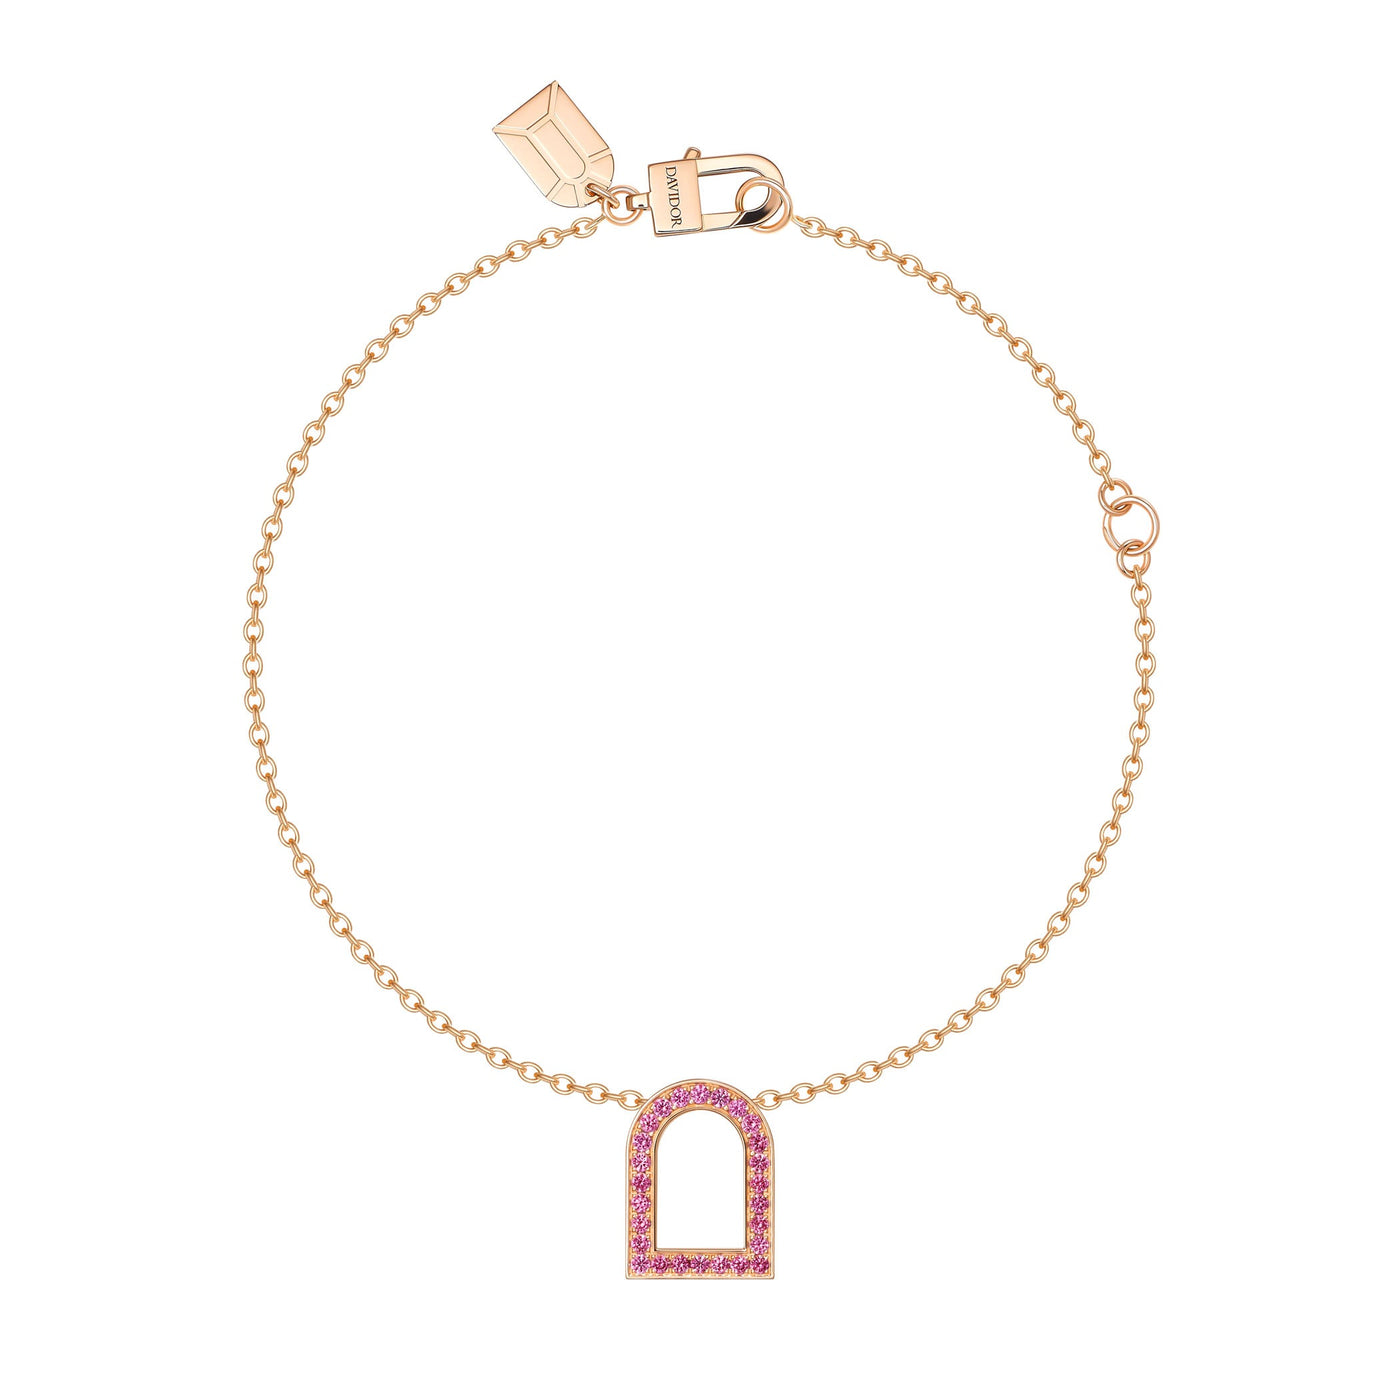 L'Arc Voyage Charm MM, 18k Rose Gold with Galerie Pink Sapphires on Chain Bracelet - DAVIDOR